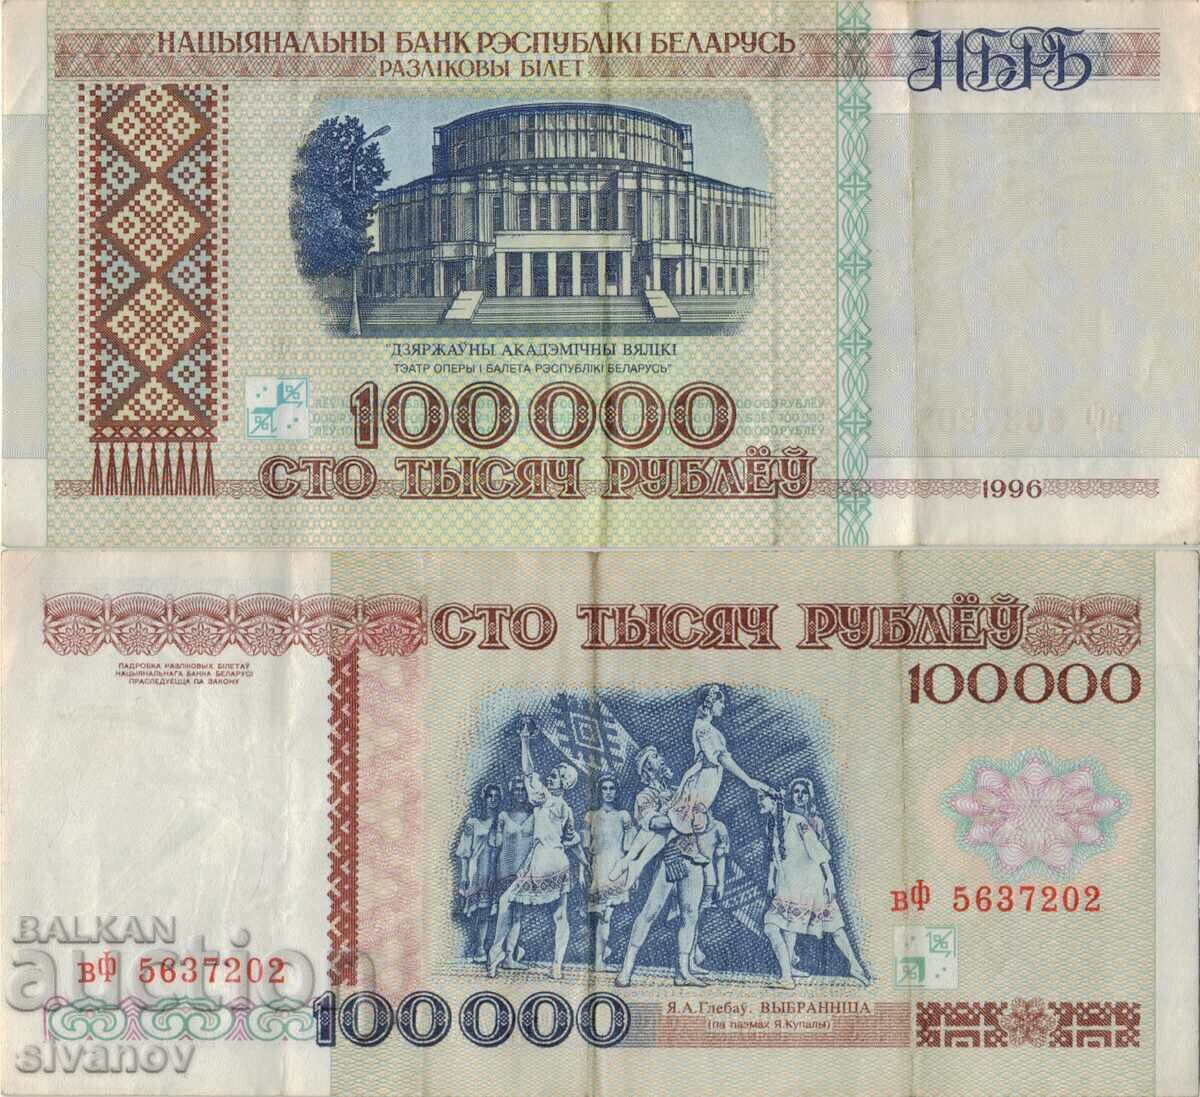 Belarus 100.000 de ruble 1996 bancnota #5133